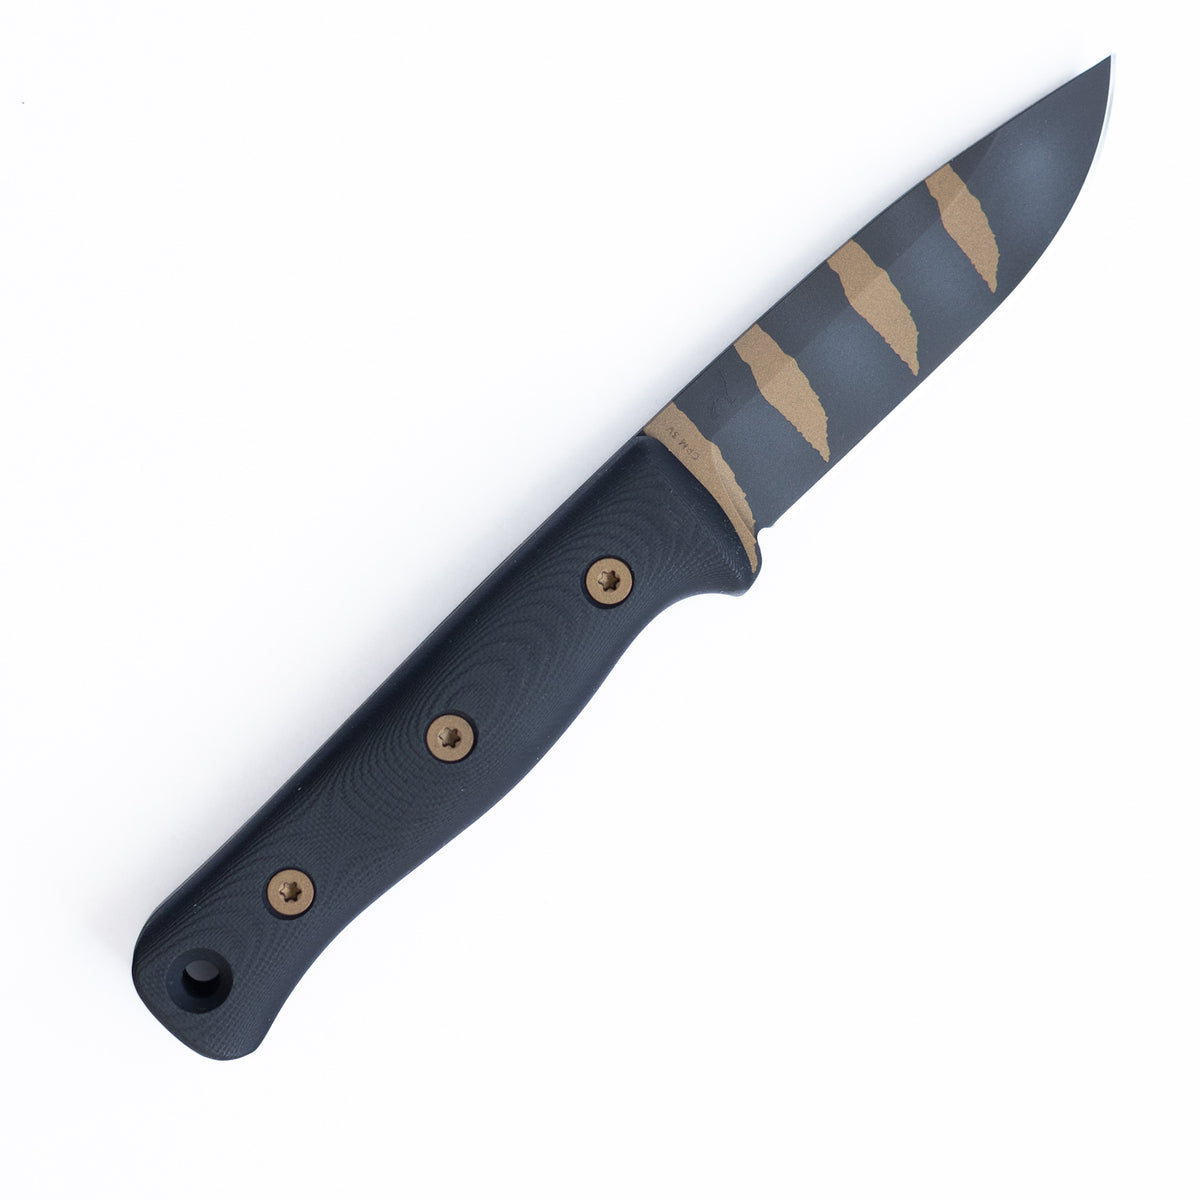 F4 Bushcraft Survival Knife (Limited Edition Rip Torn Blade, CPM 3V, Black G10)